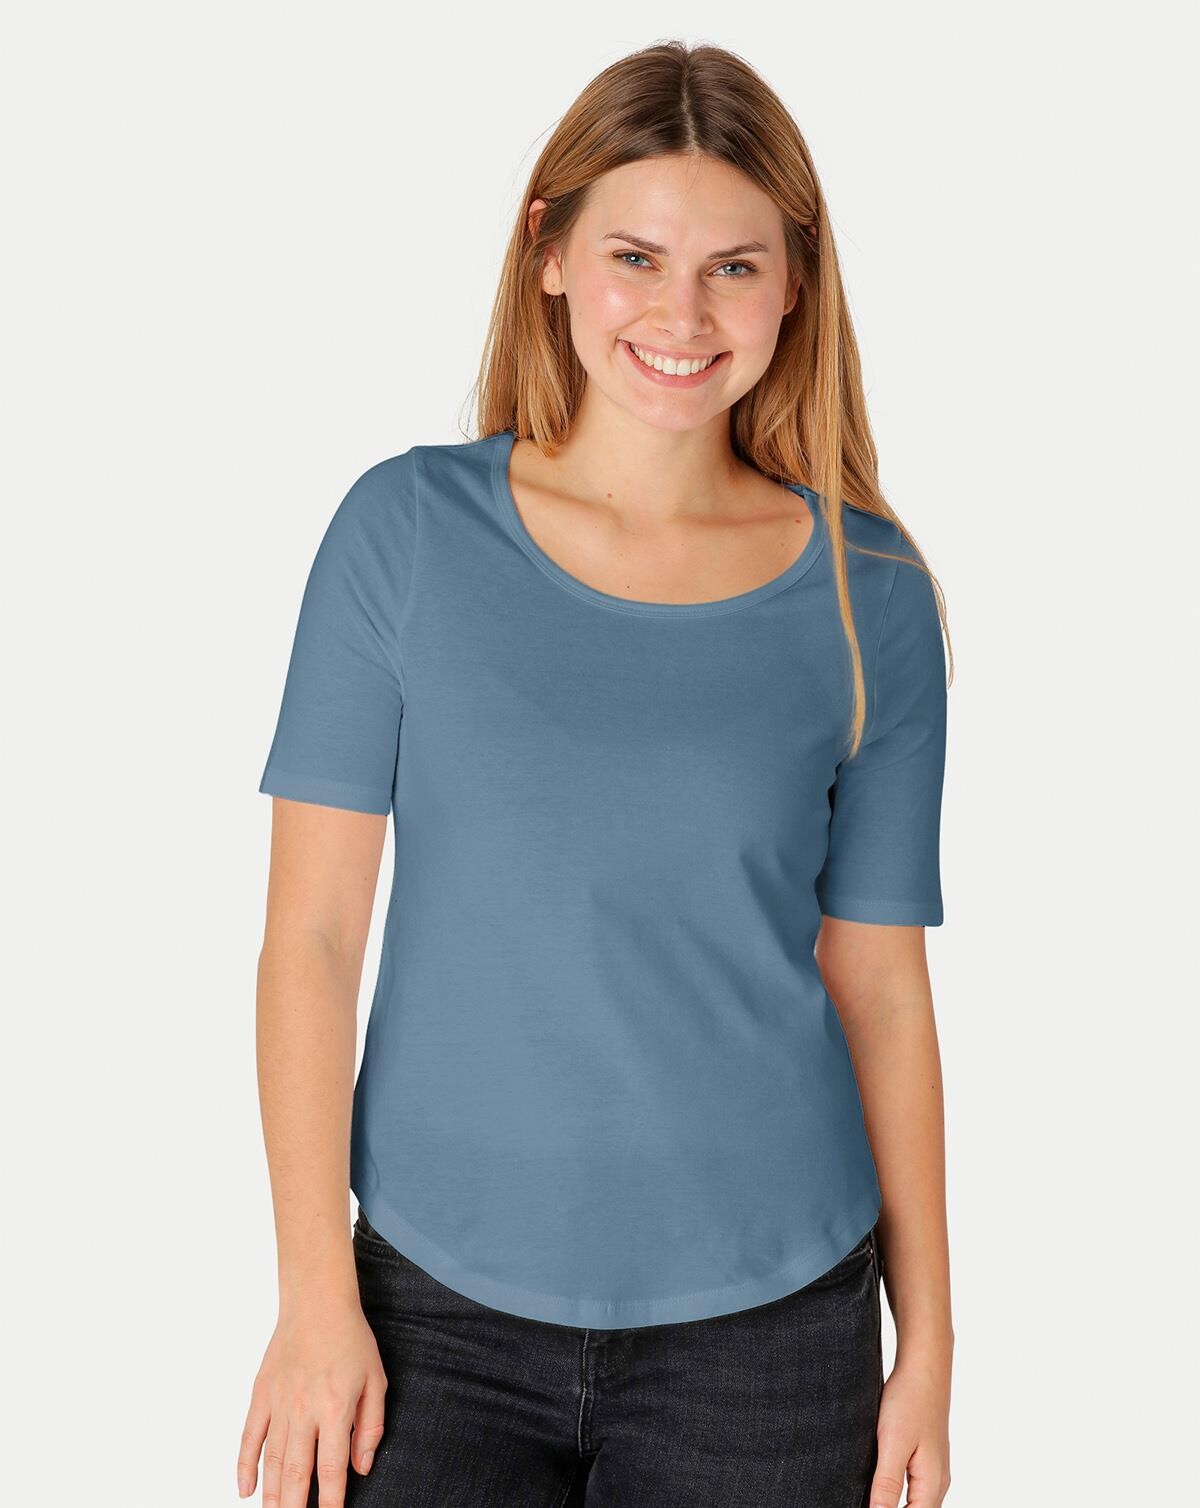 Neutral Organic - Ladies Half Sleeve T-shirt (Indigo, L)